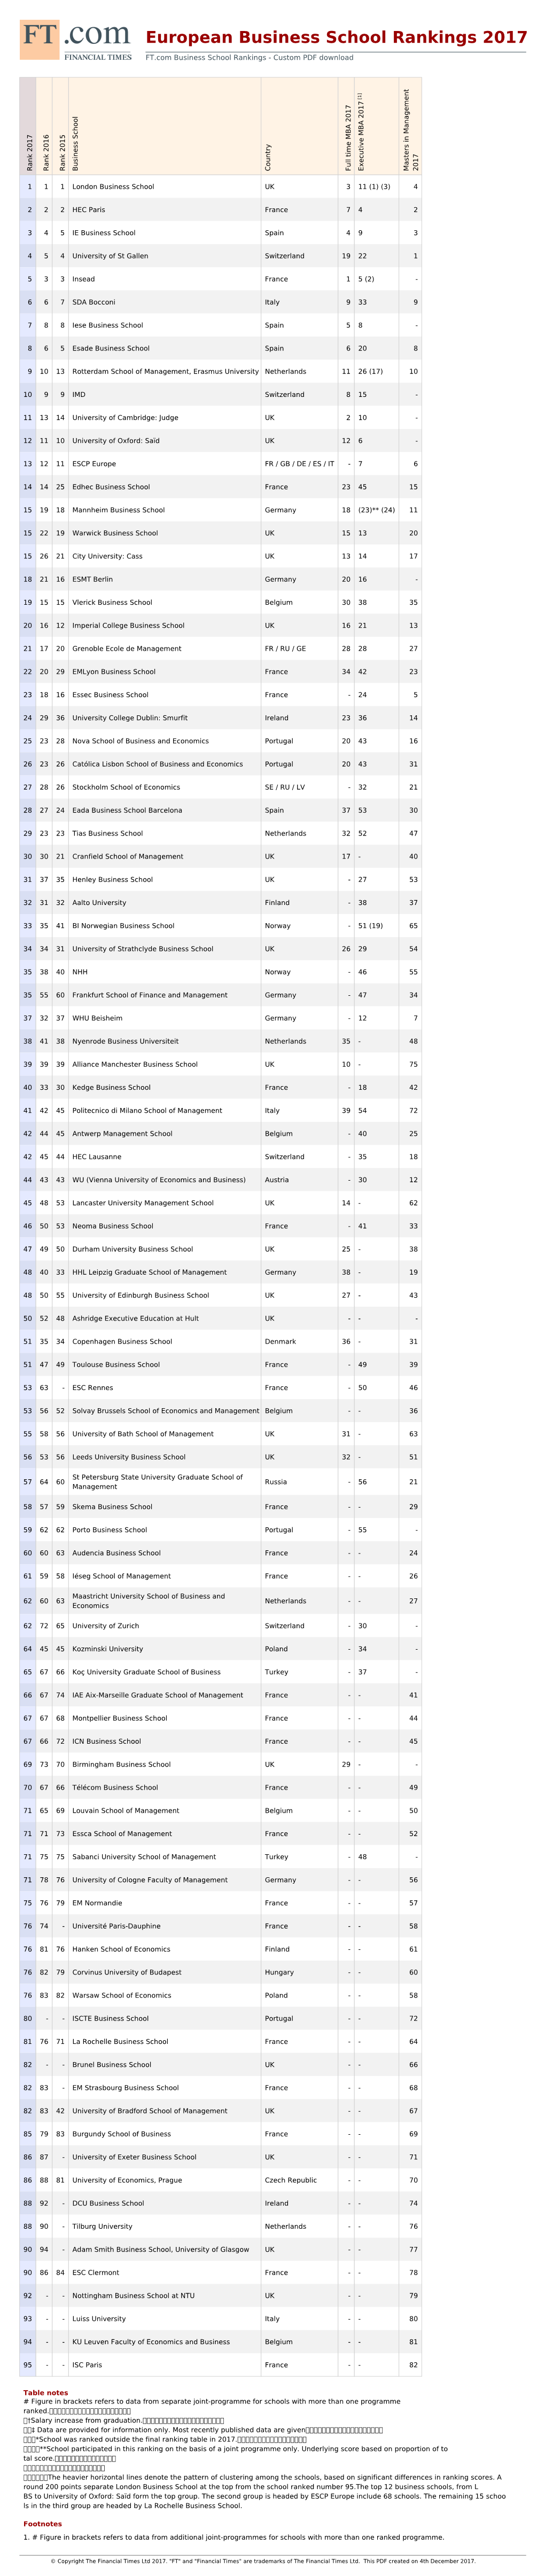 European Business School Rankings 2017